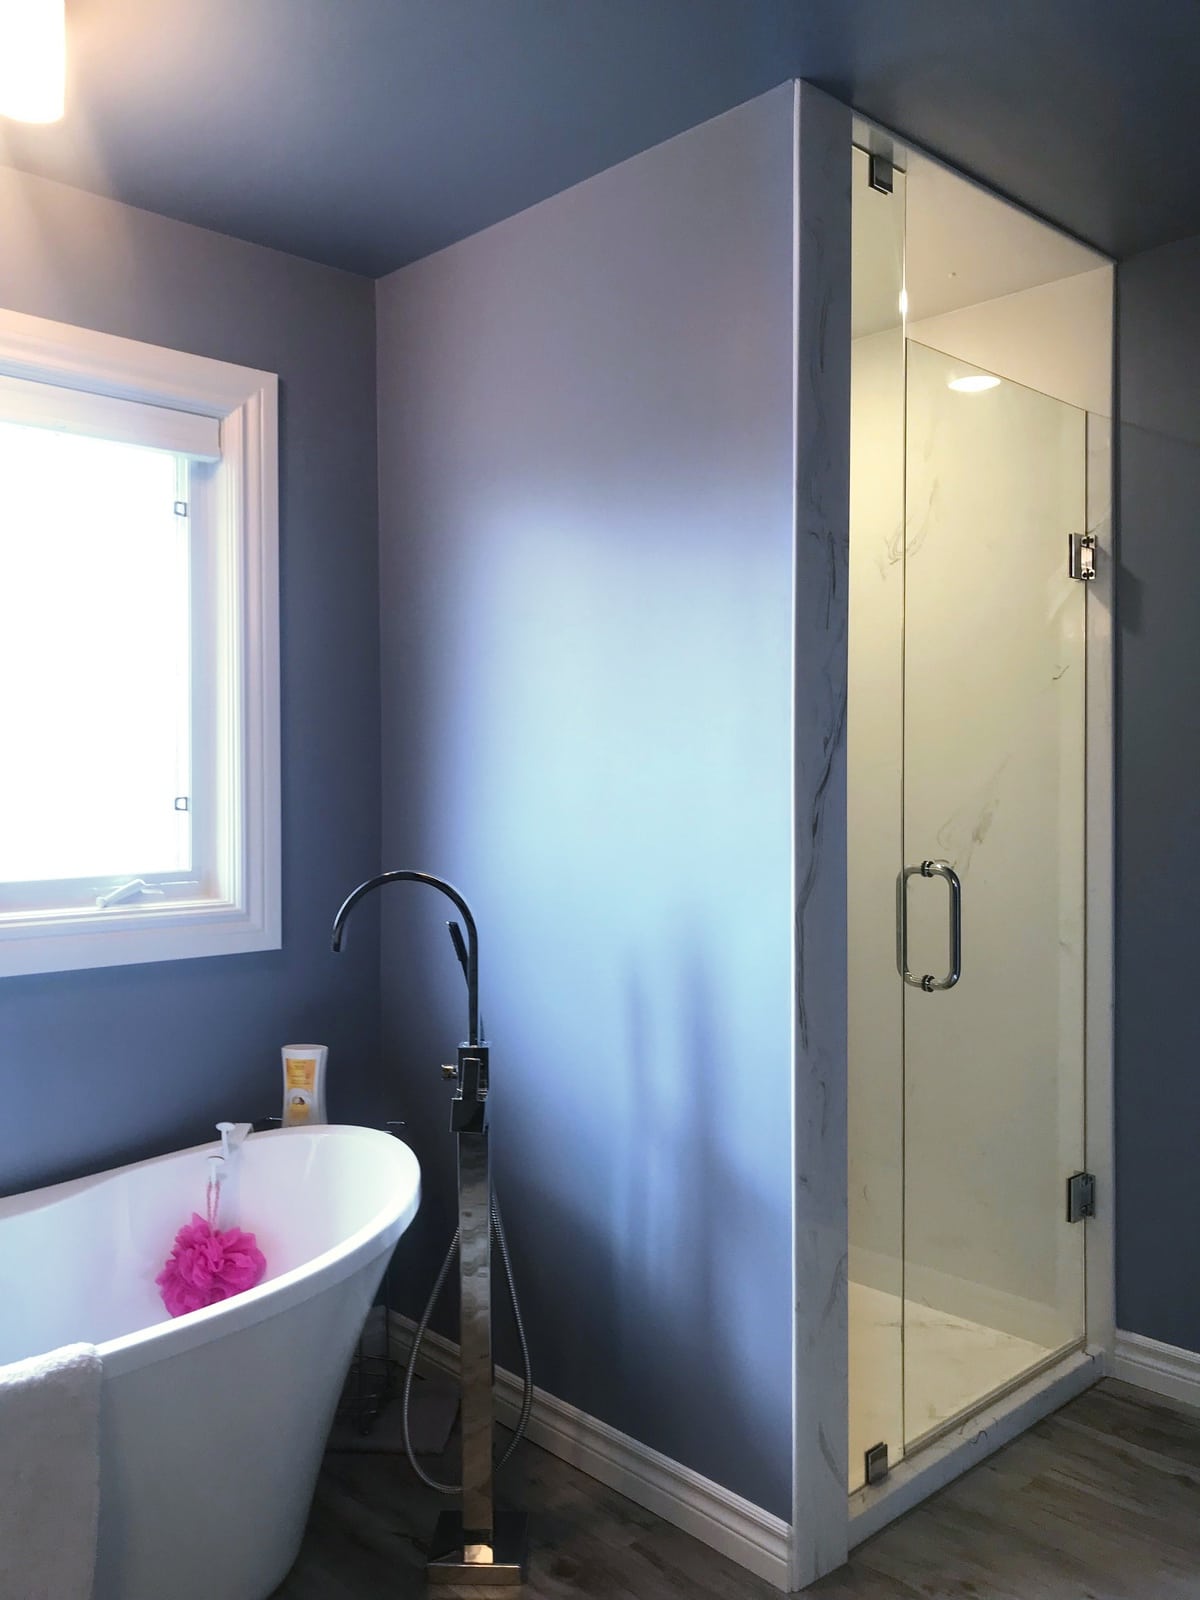 Complete with shower base, walls, ceiling panel & frameless shower door.